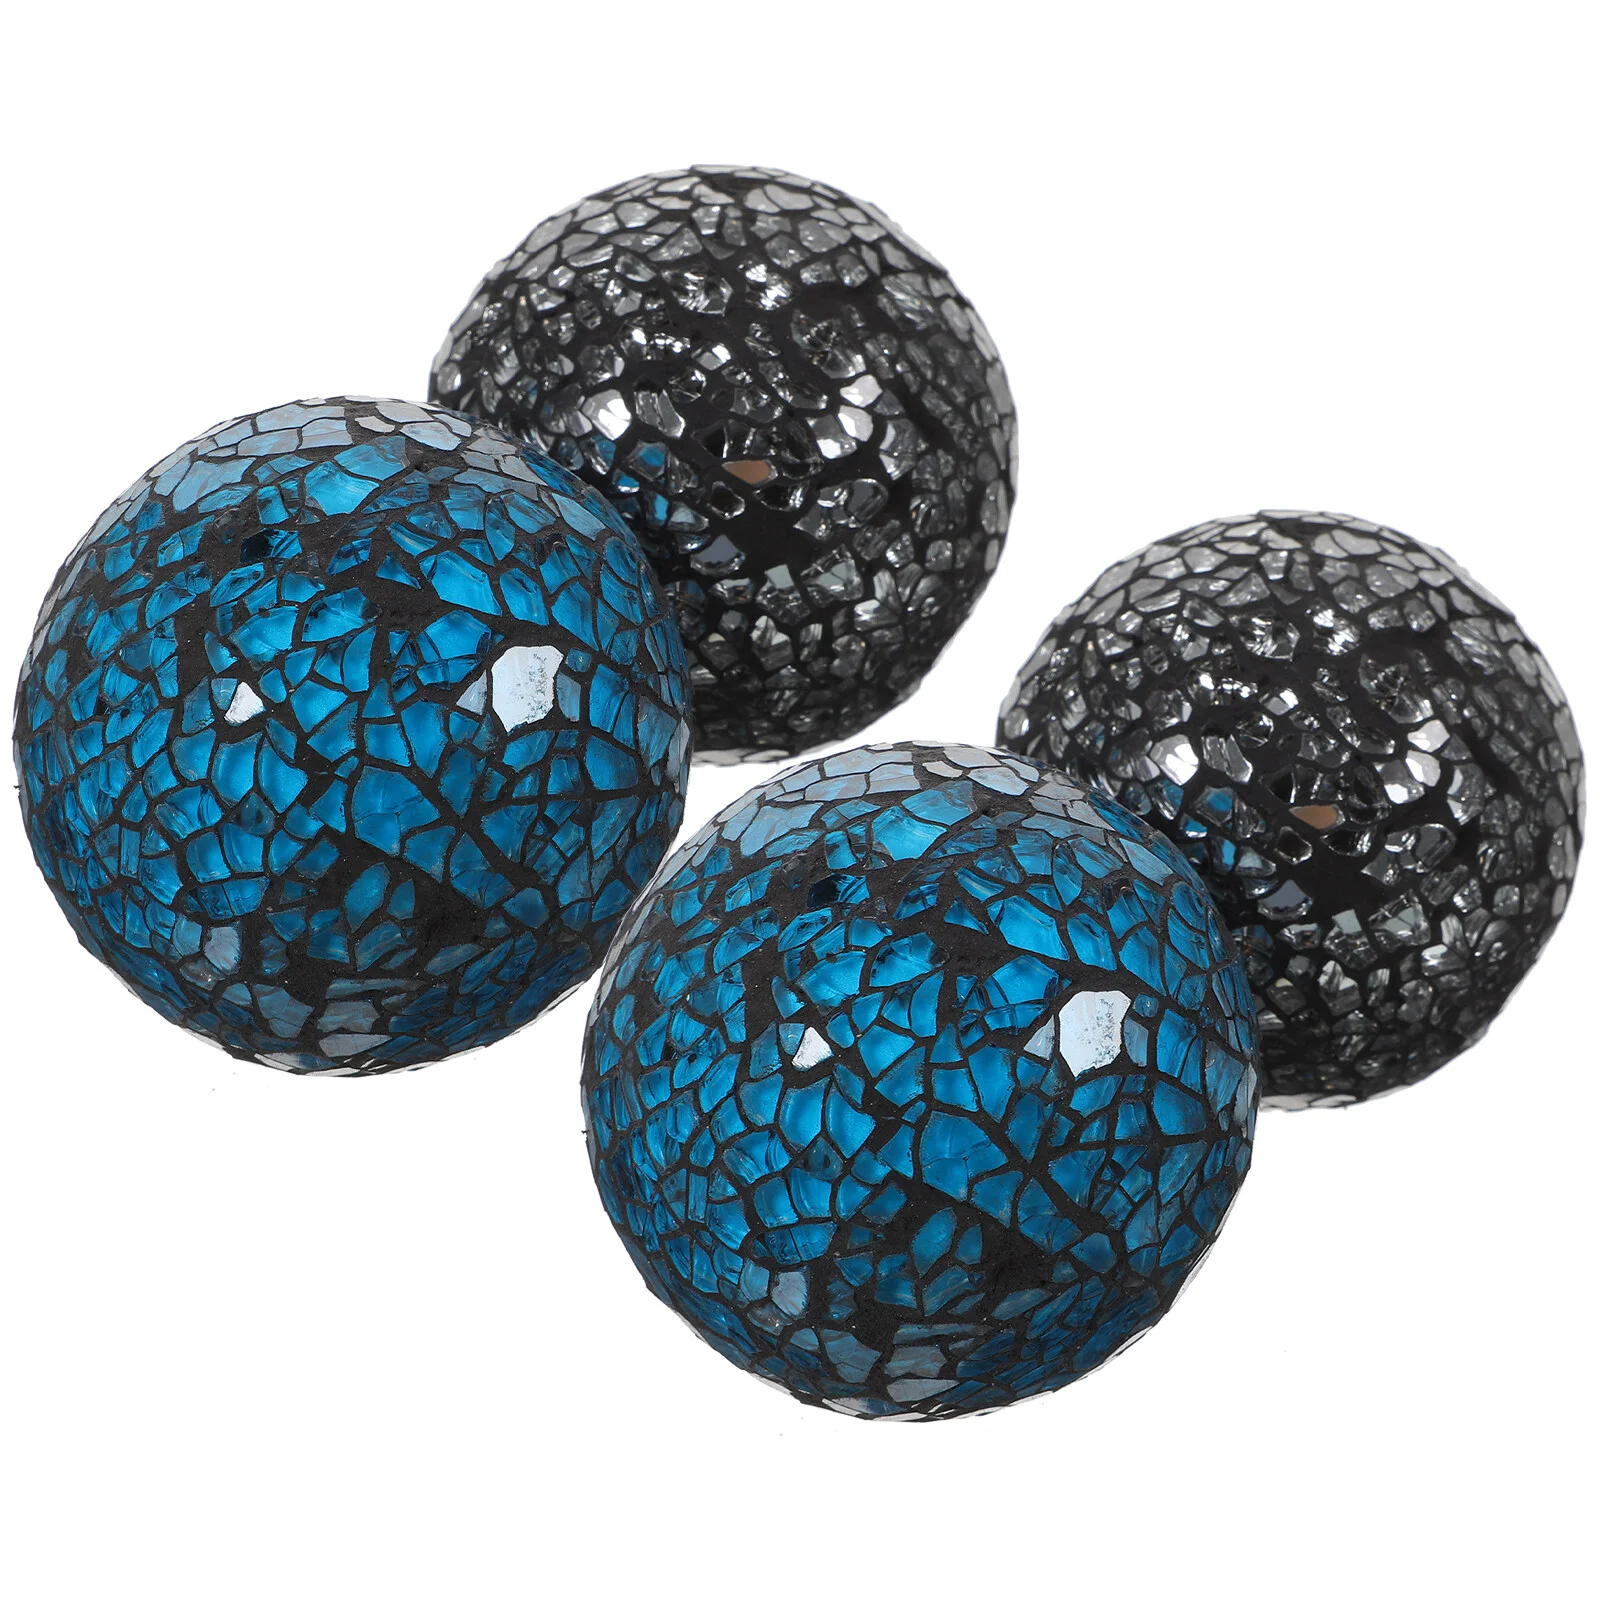 

4 Pcs House Decorations Home Desktop Ornament Field Sphere Ball Crafts Mosaic Glass Disco Balls